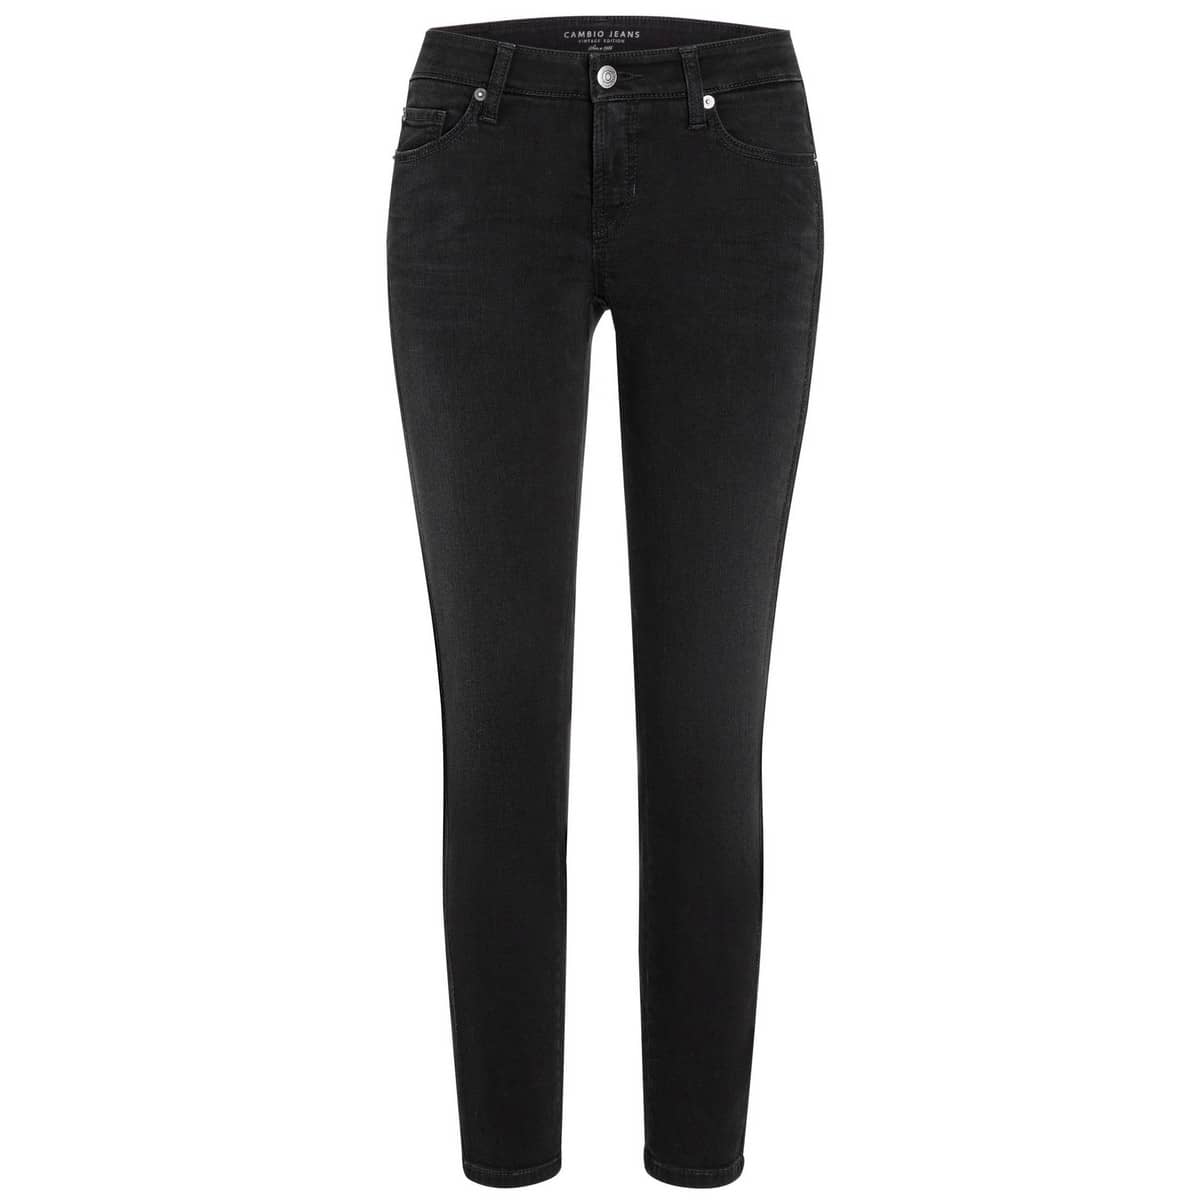 Cambio • zwarte jeans met metalic bies BollyWolly